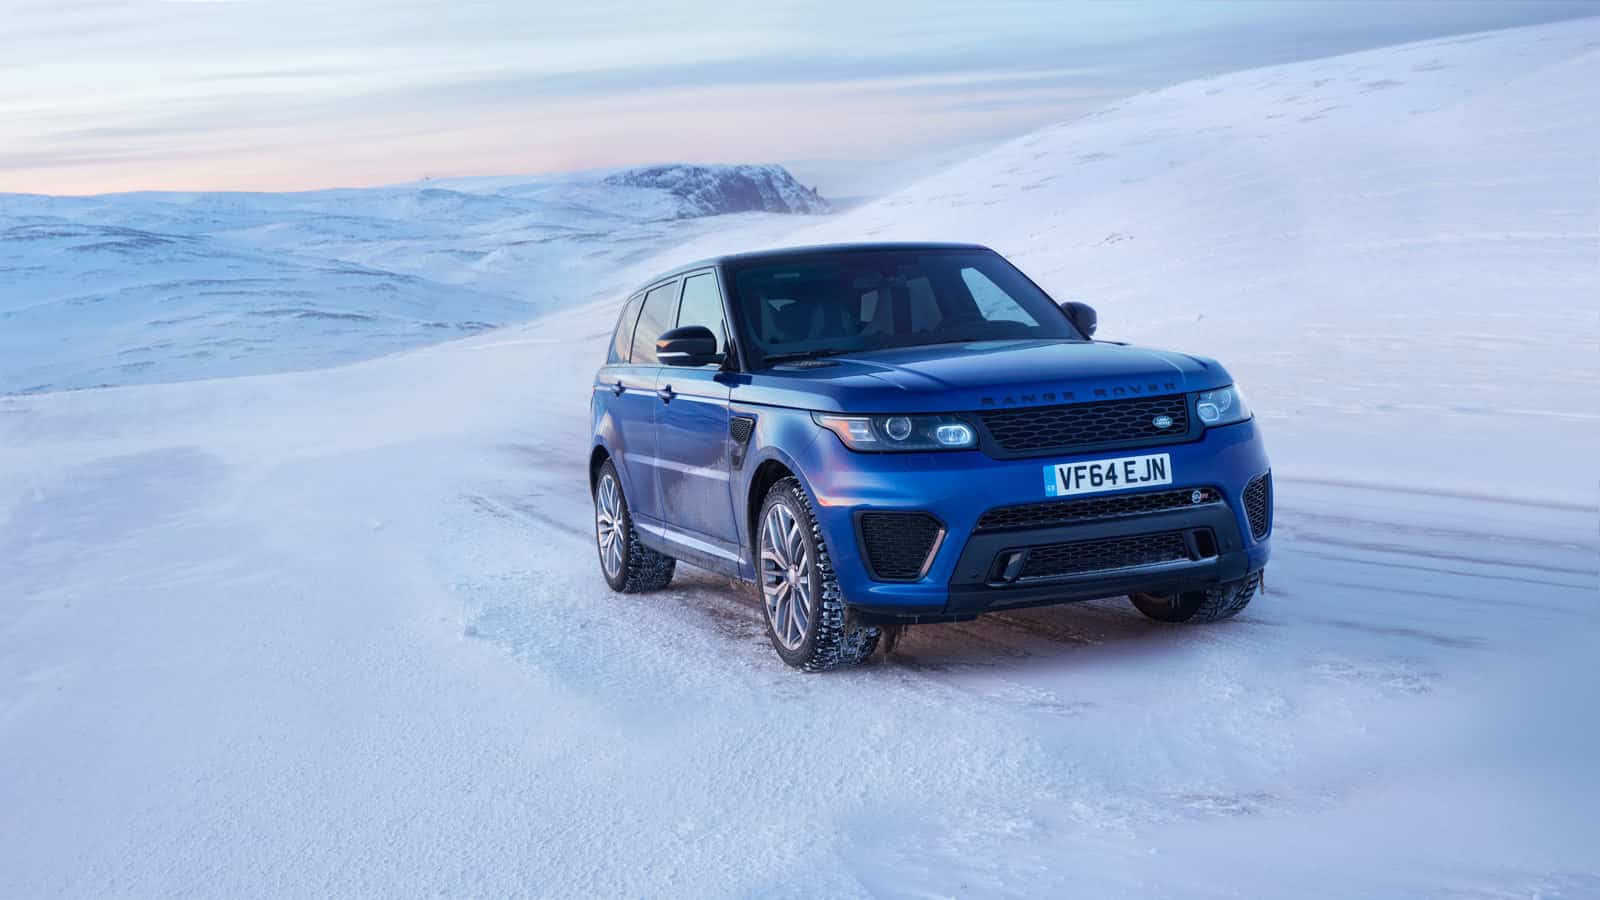 Range Rover Sport SVR driving through snowy landscape